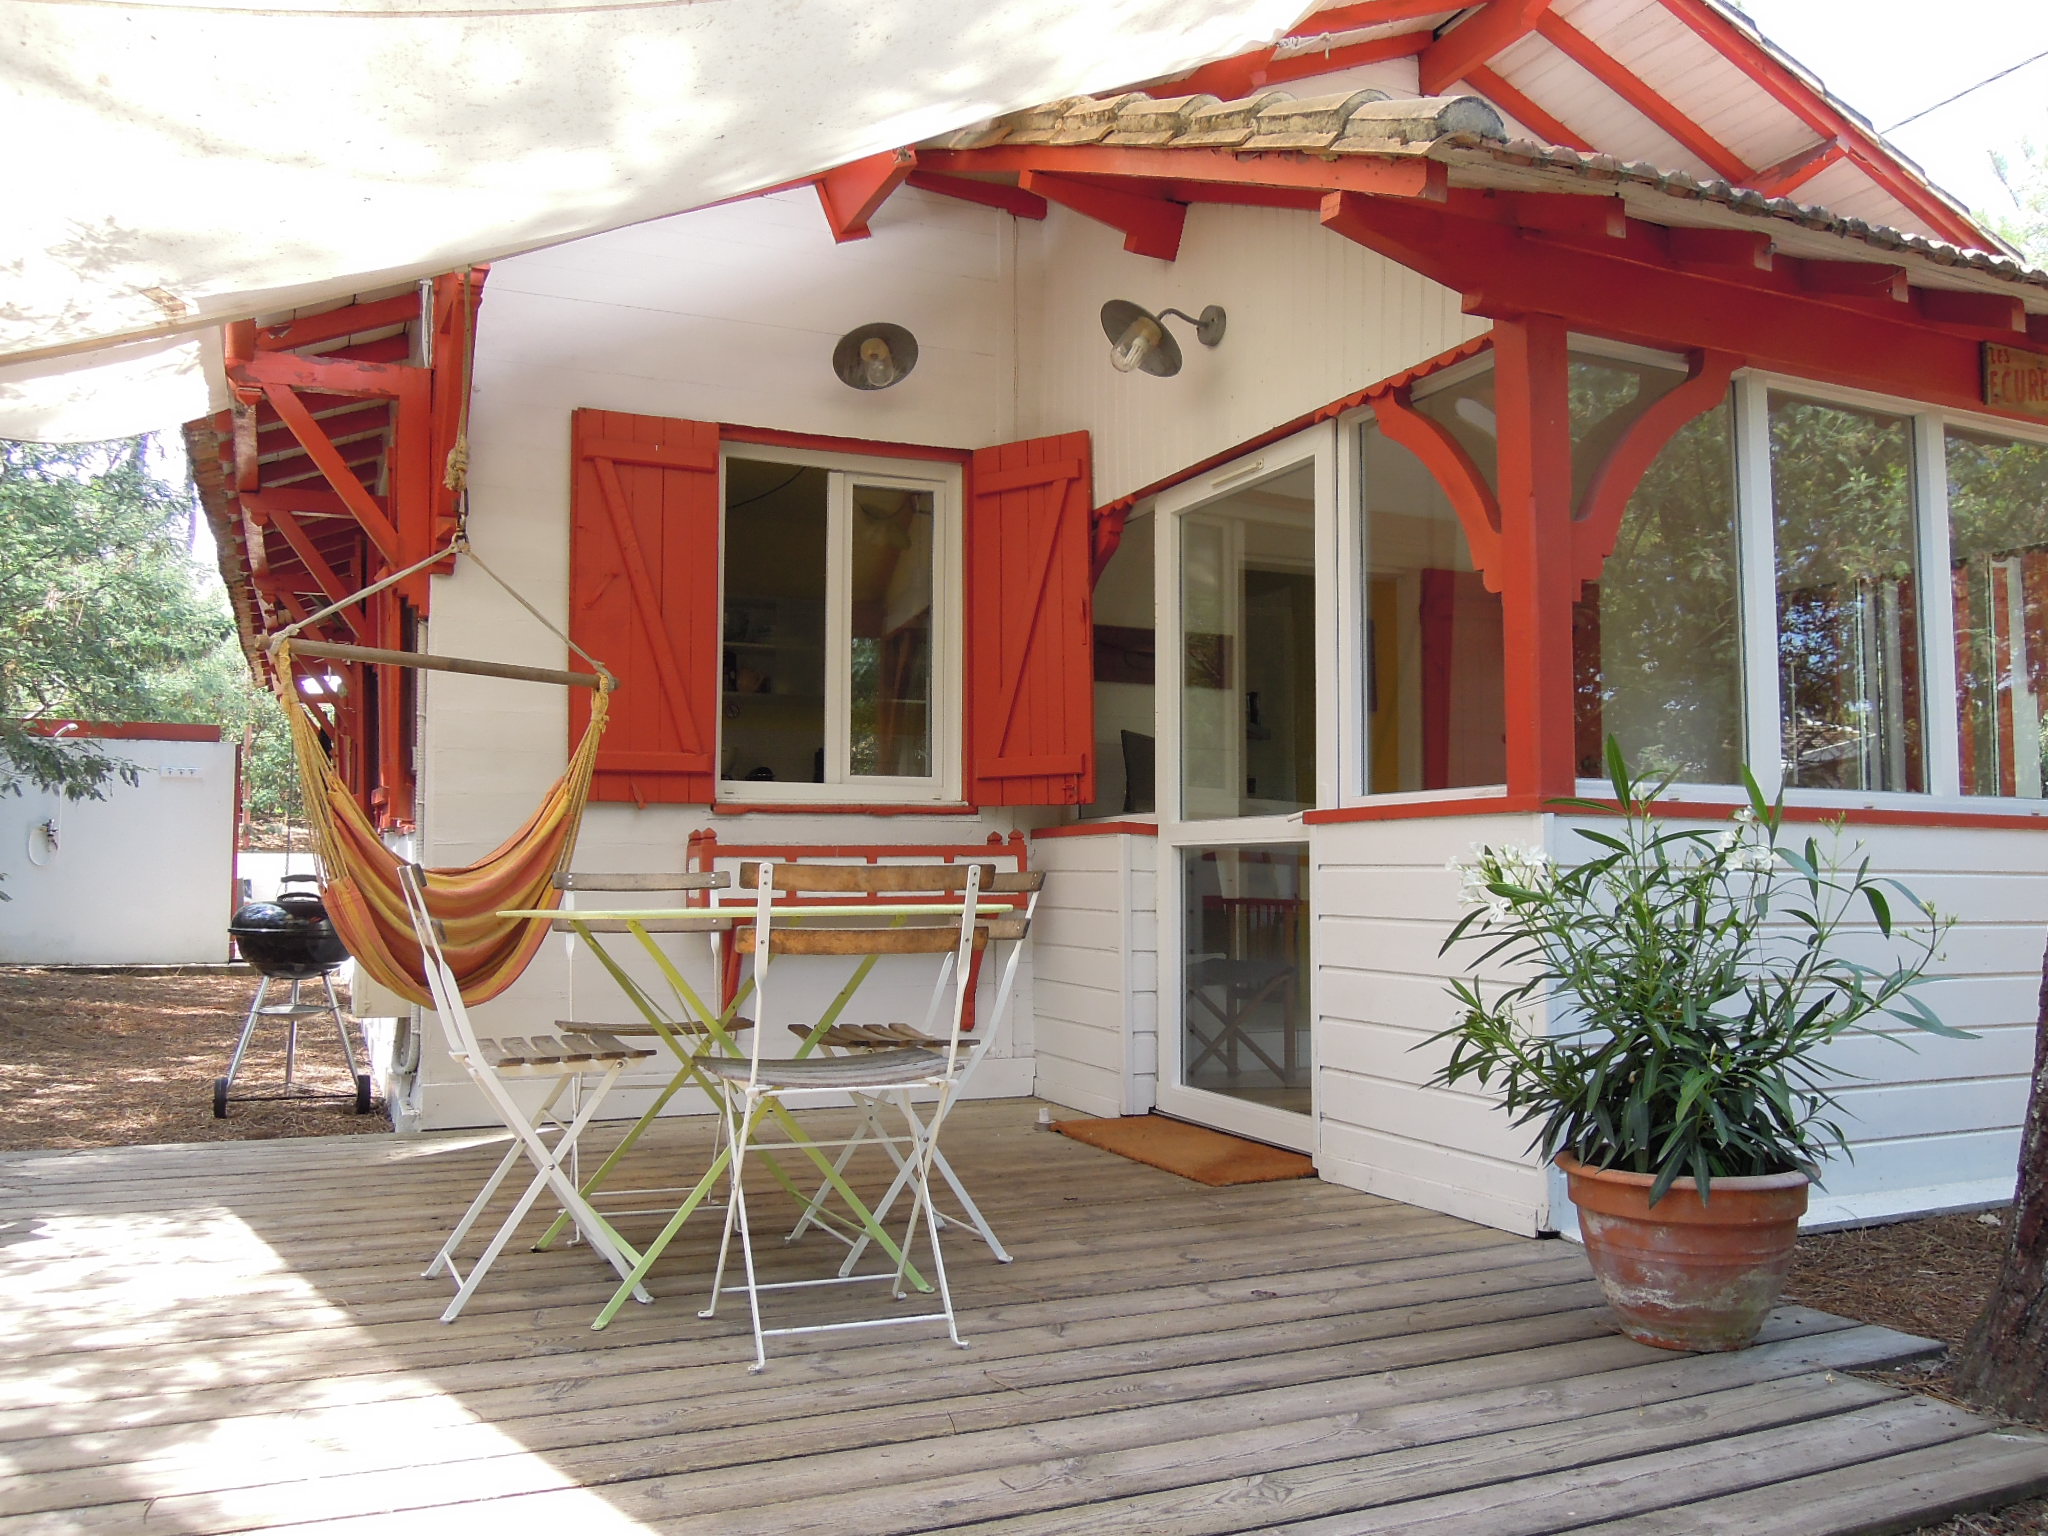 Villa Cap-Ferret 44 hectares - Houses for Rent in Lège-Cap-Ferret, France